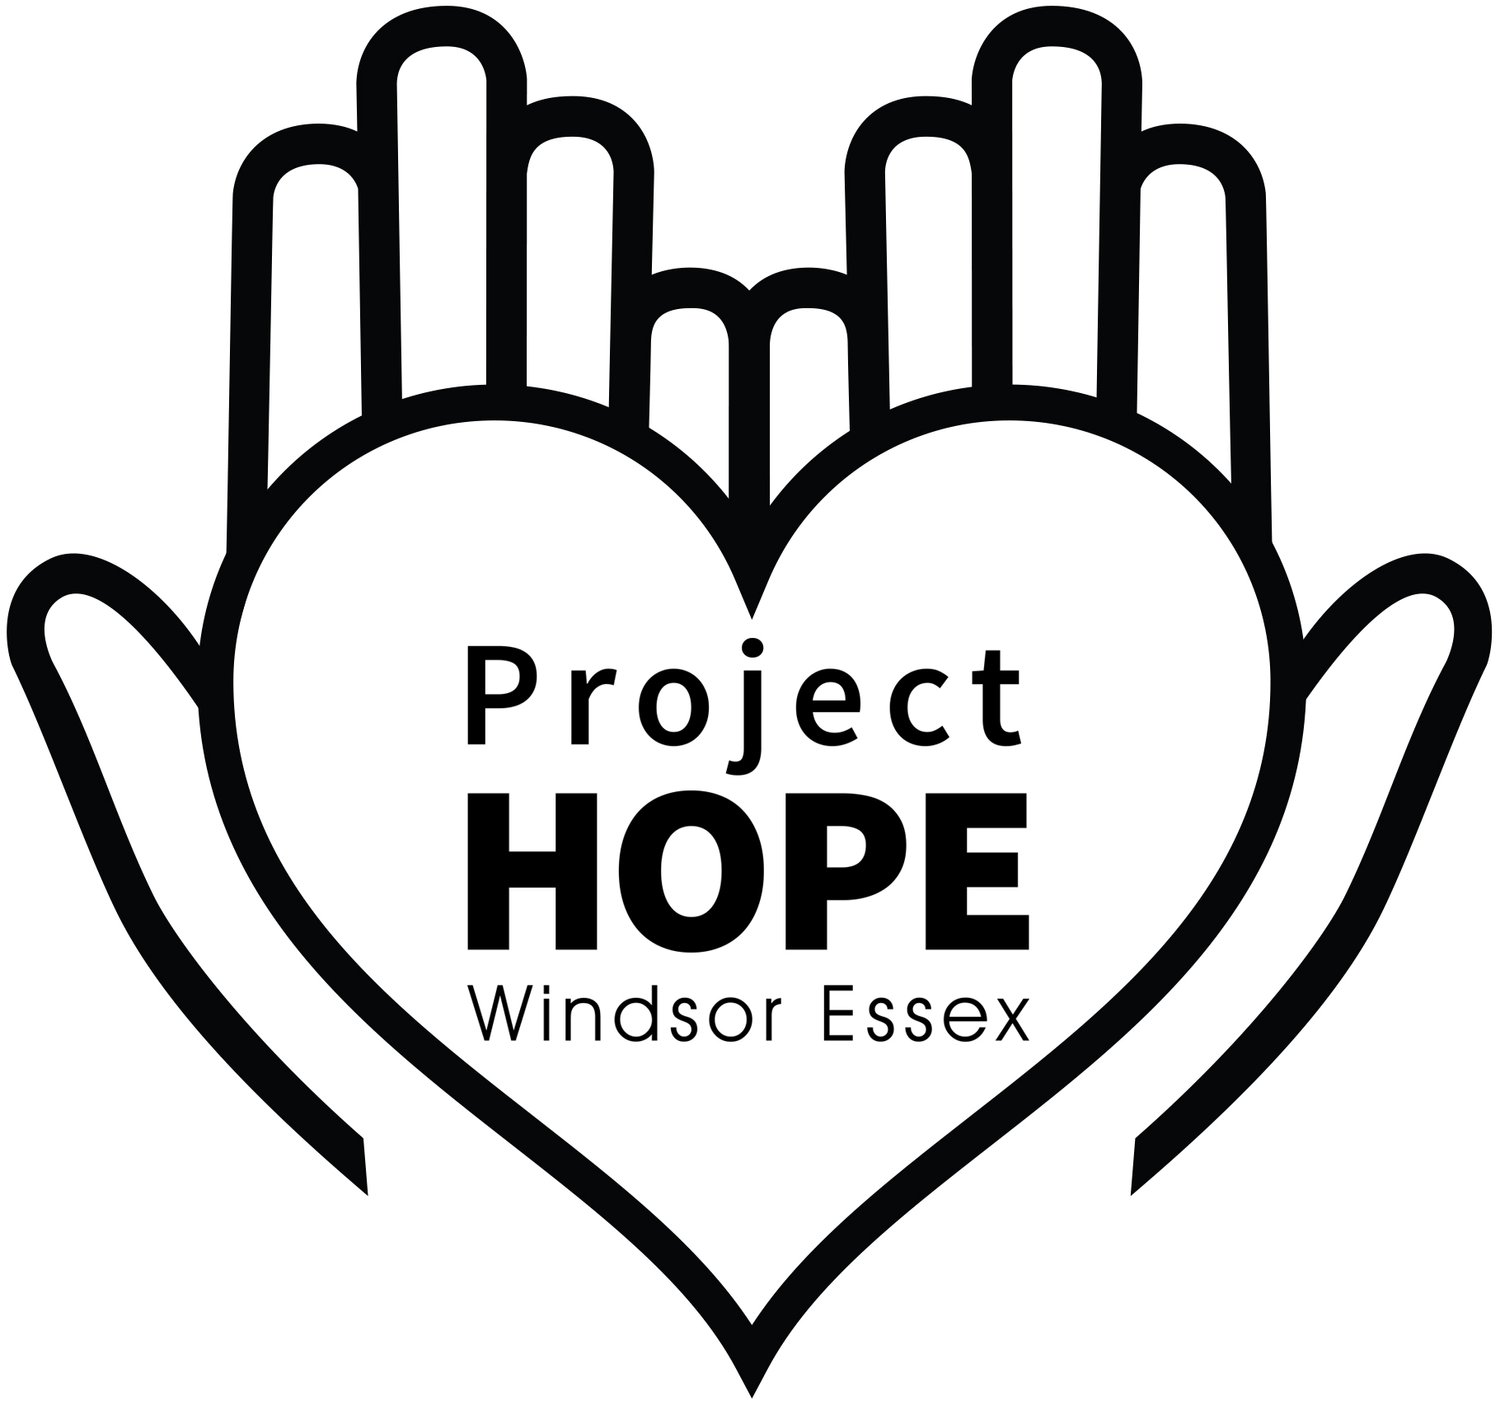 Project HOPE Windsor Essex